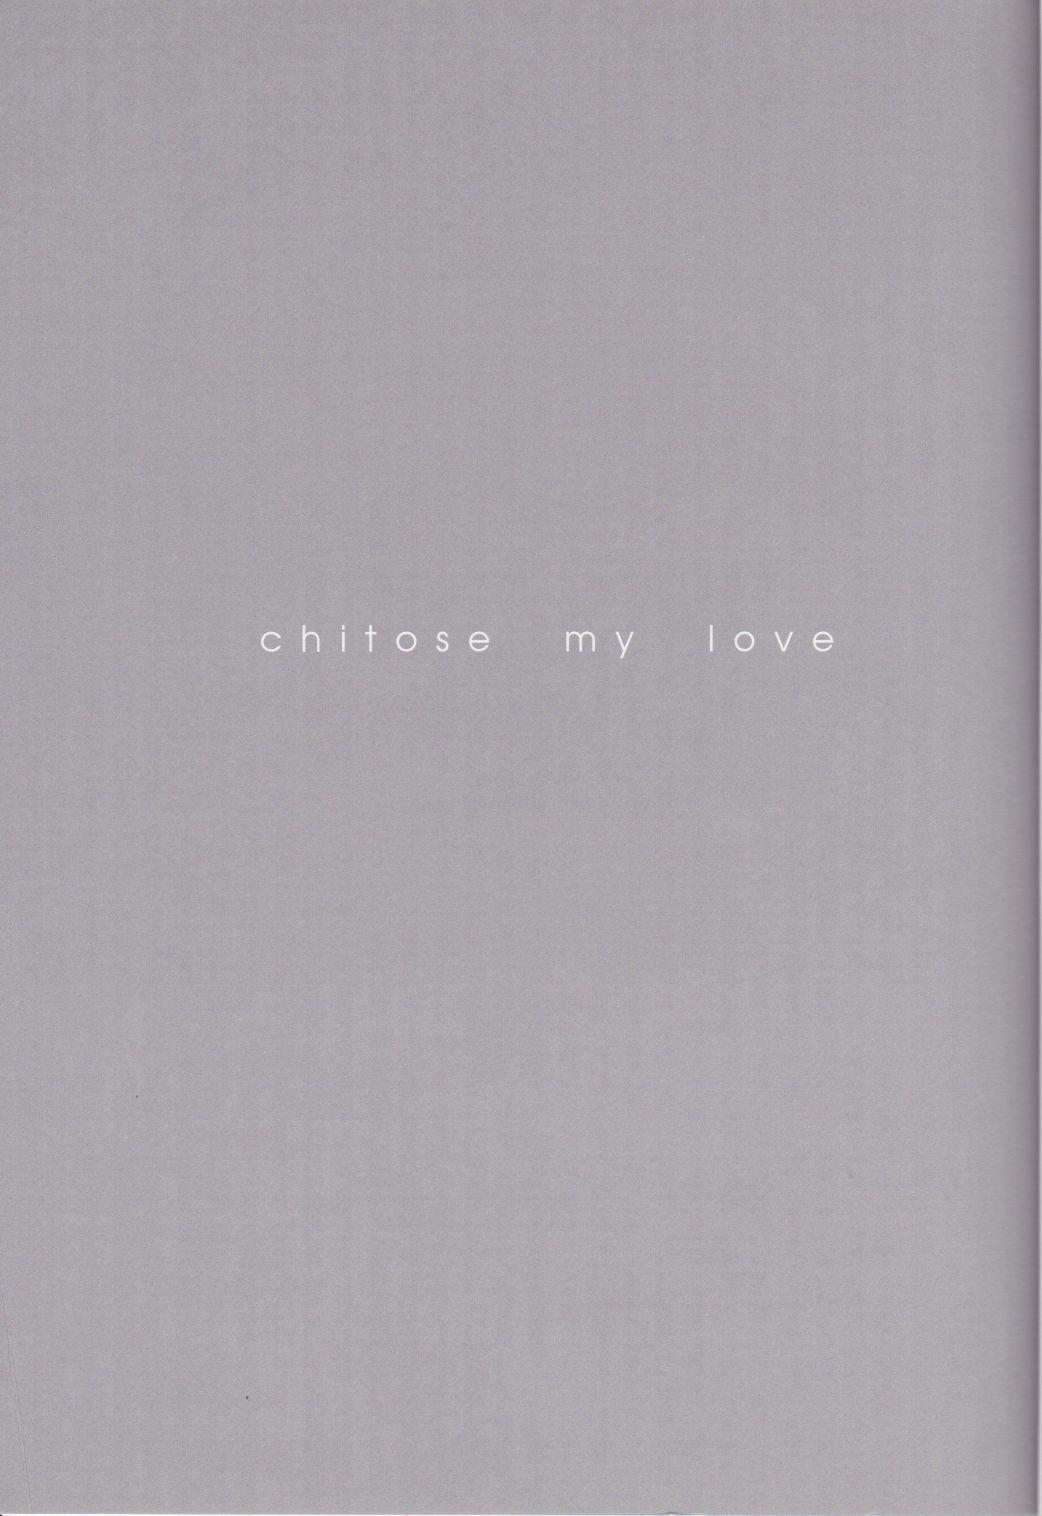 Chitose my love 2